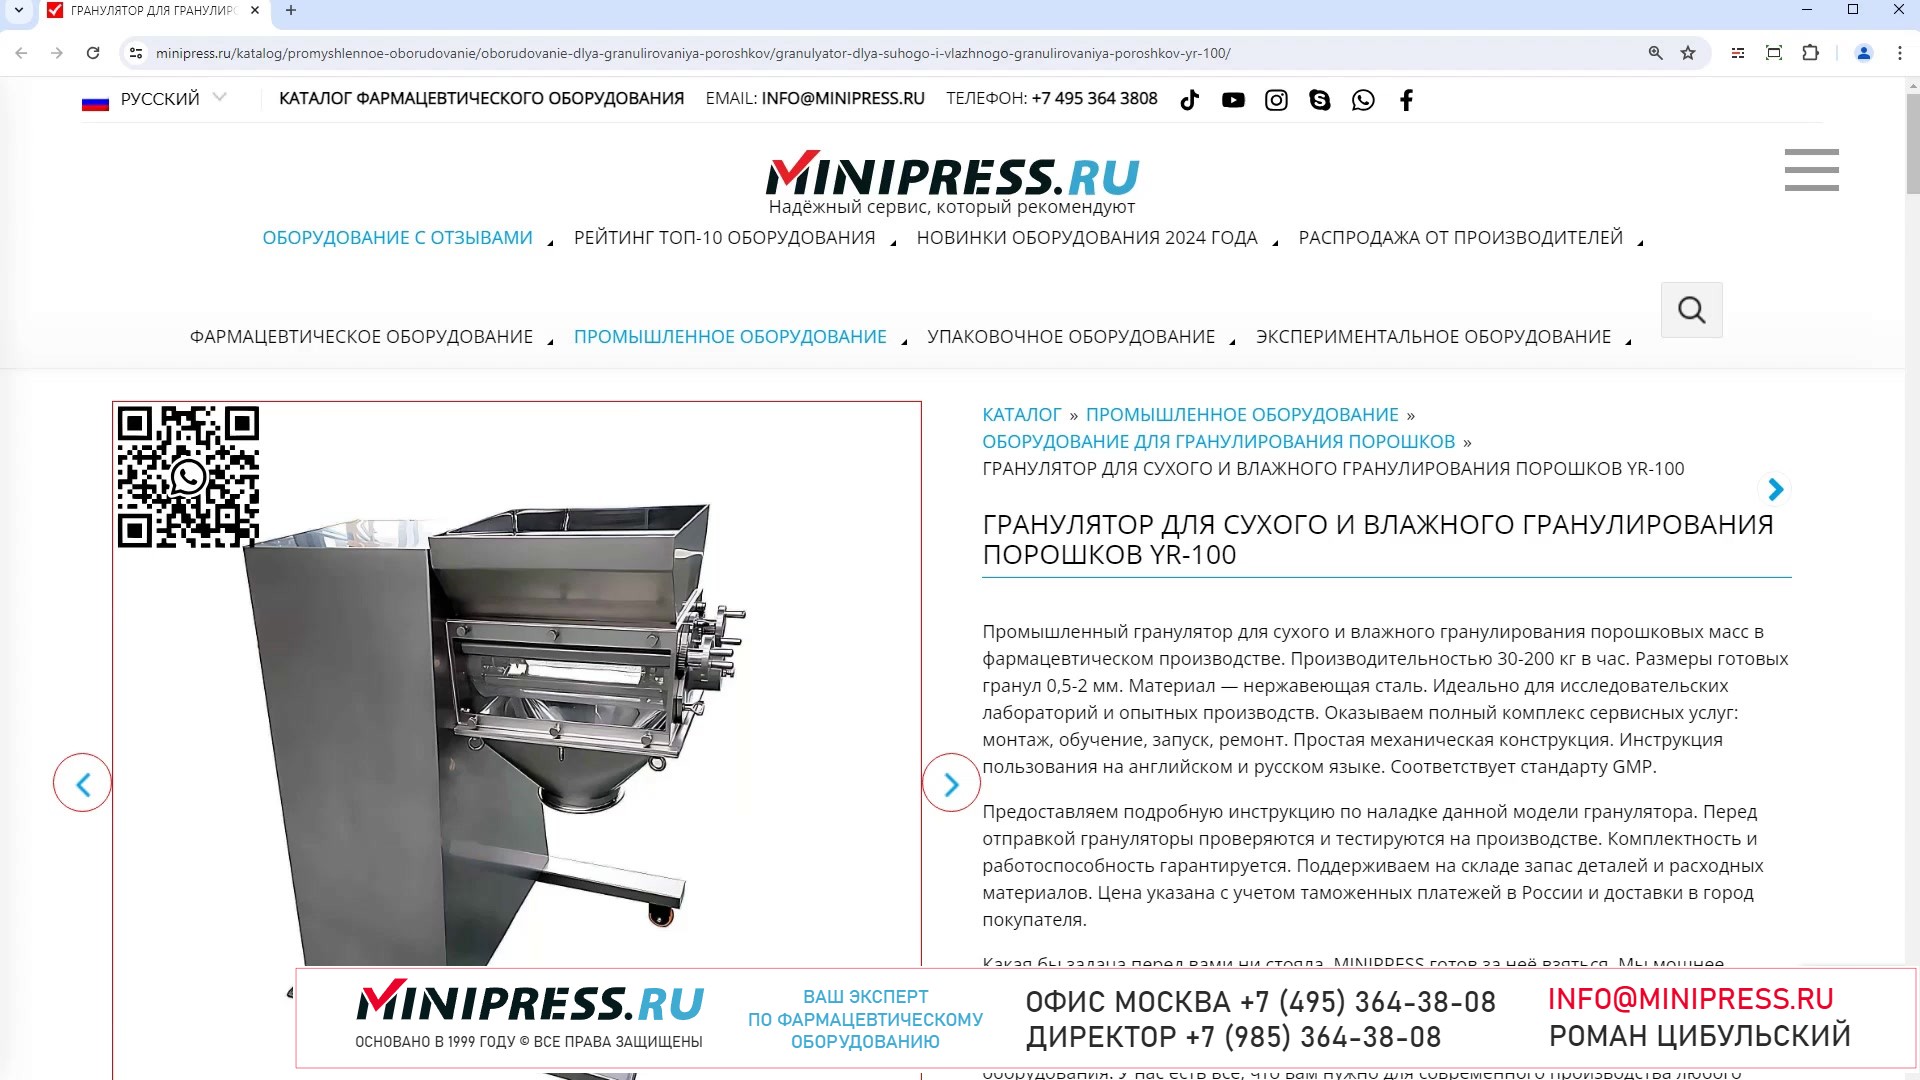 Minipress.ru Гранулятор для сухого и влажного гранулирования порошков YR-100